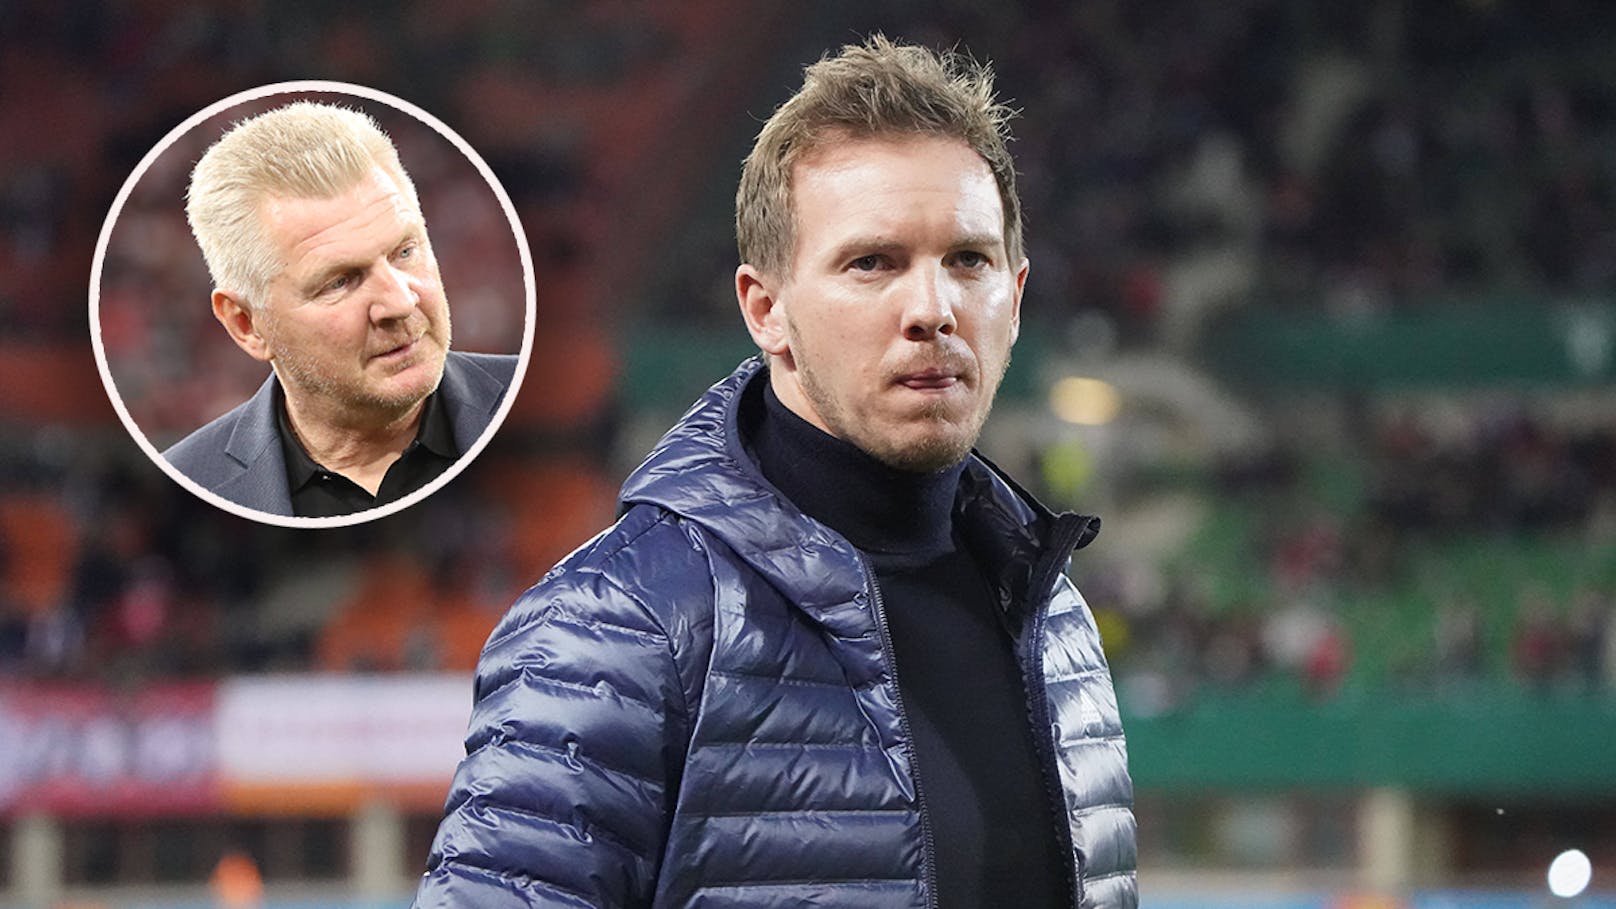 Ikone nimmt DFB-Coach Nagelsmann auseinander